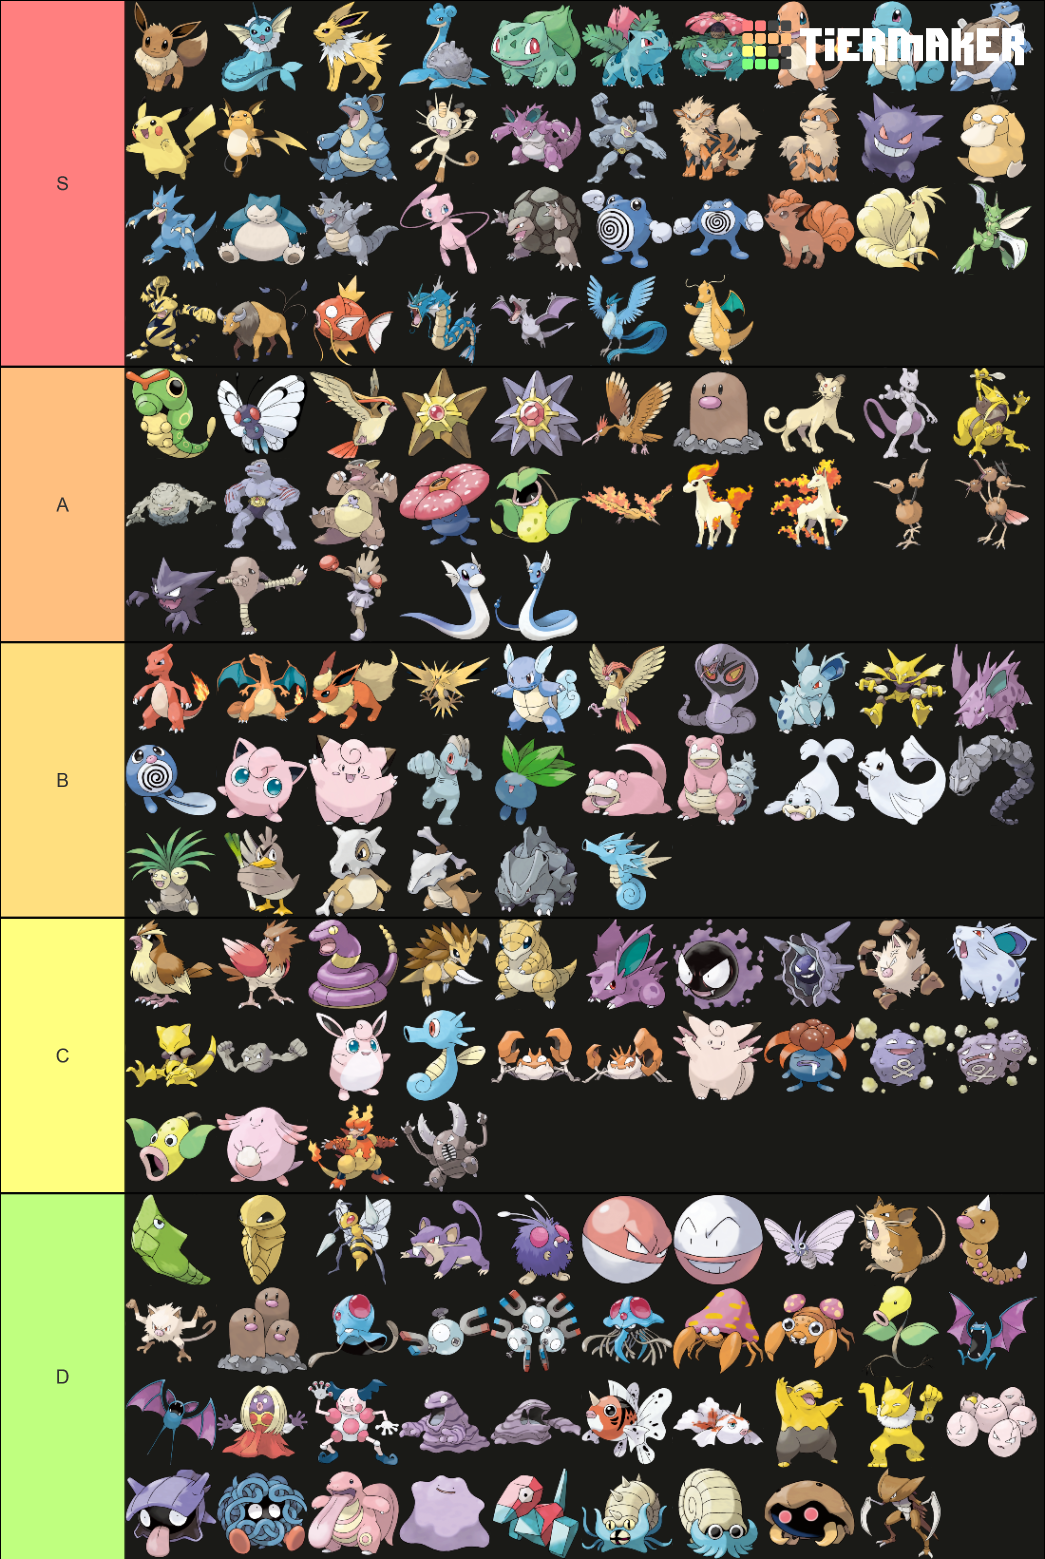 Kanto Pokémon Tier List